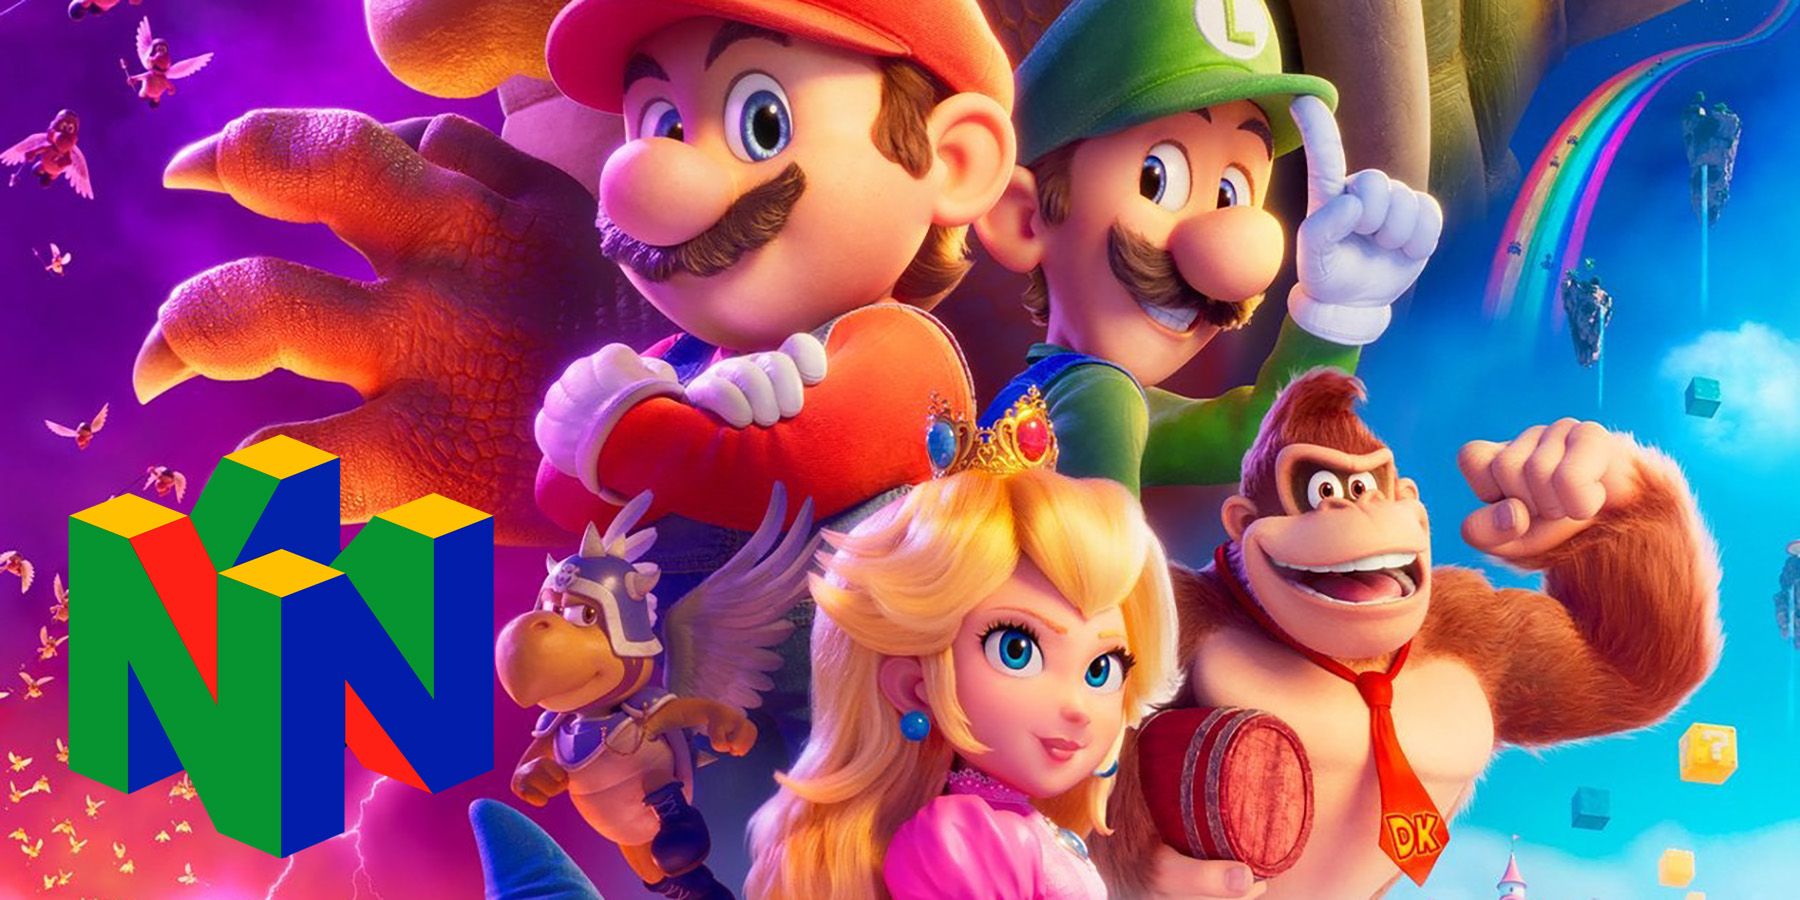 Super Mario Bros. movie poster with nintendo 64 logo